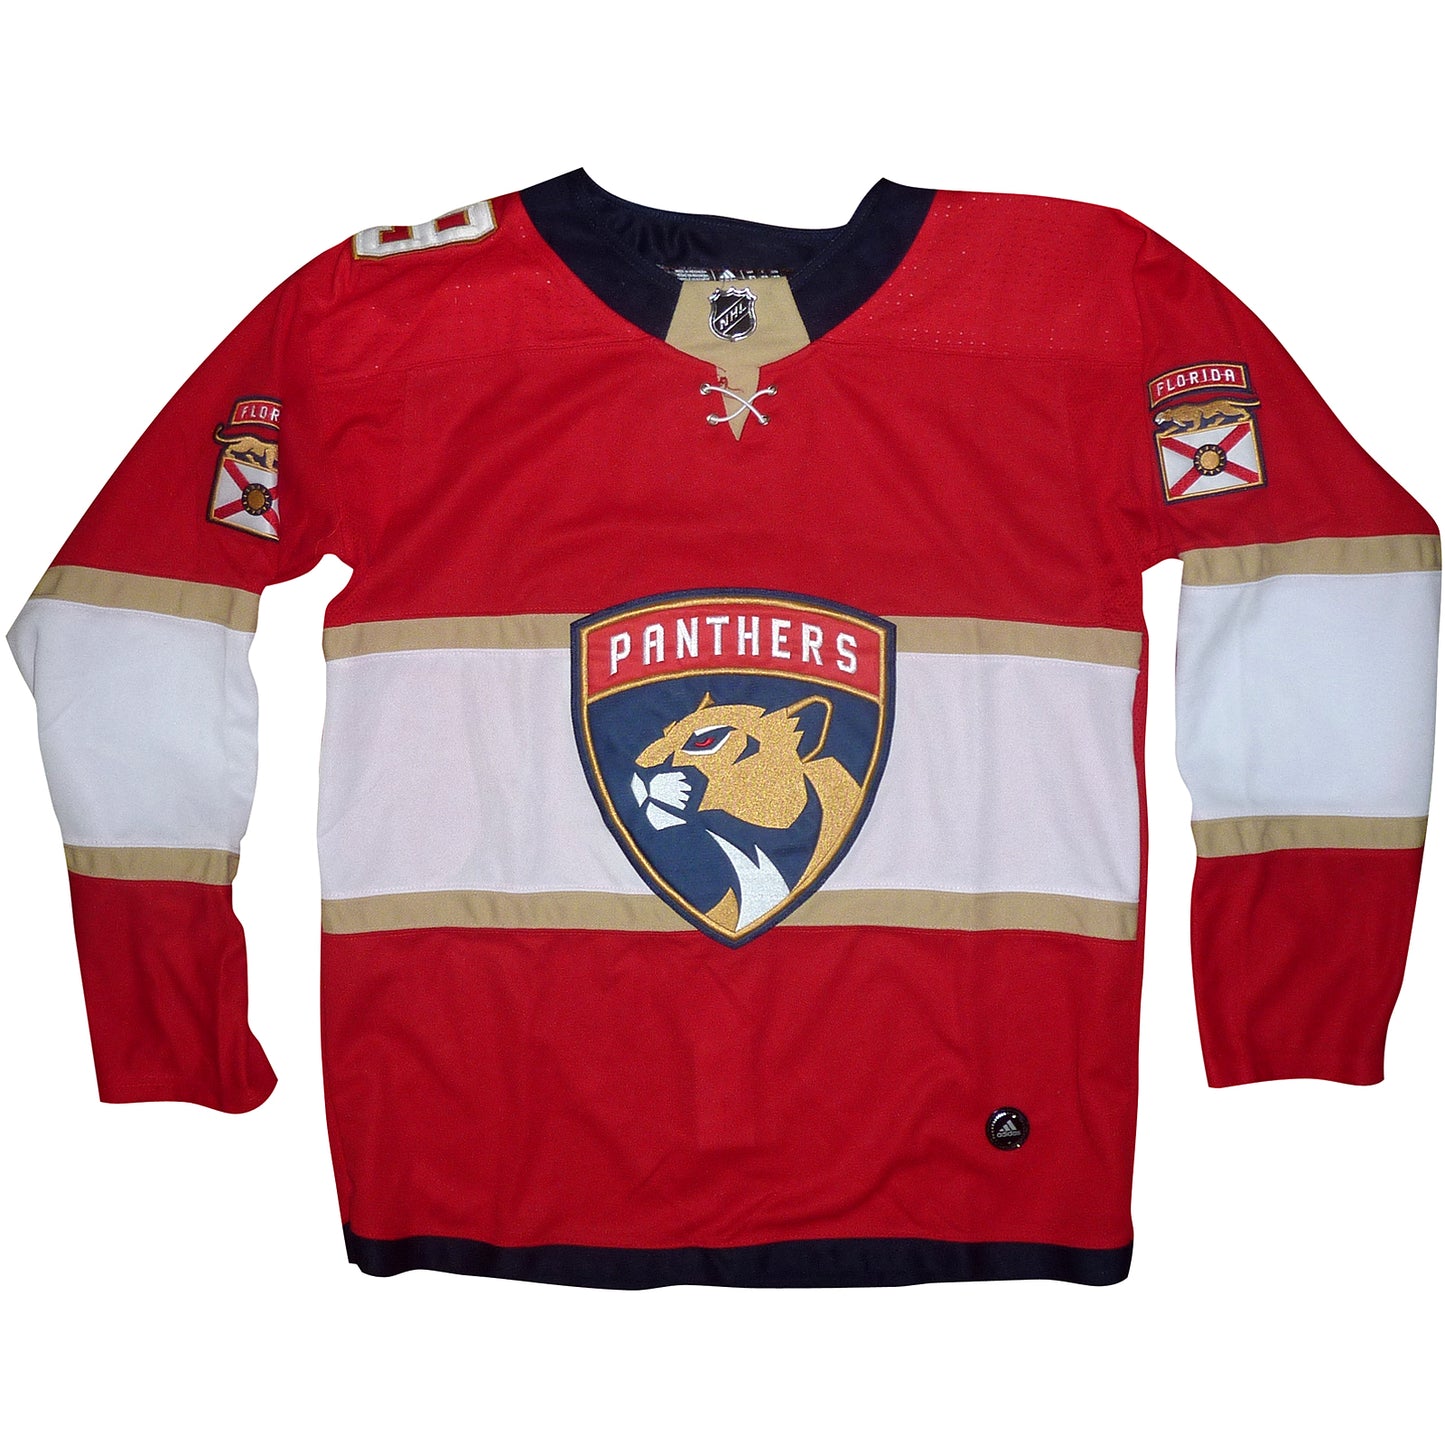 Sam Bennett Autographed Florida Panthers (Red #9) Adidas Hockey Jersey  JSA